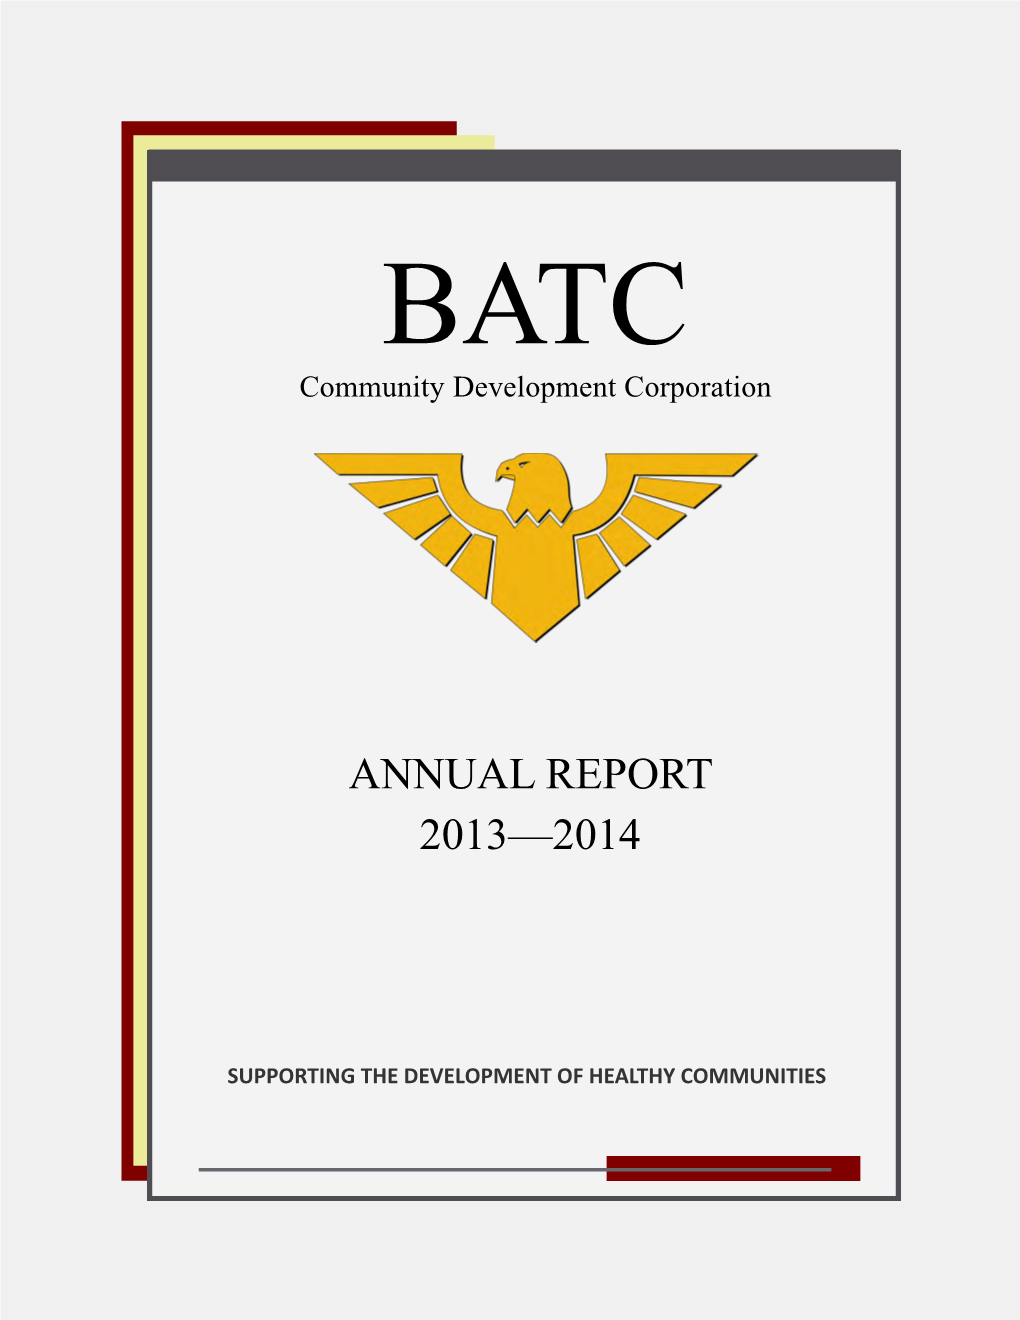 BATC CDC Annual Report 2013-2014